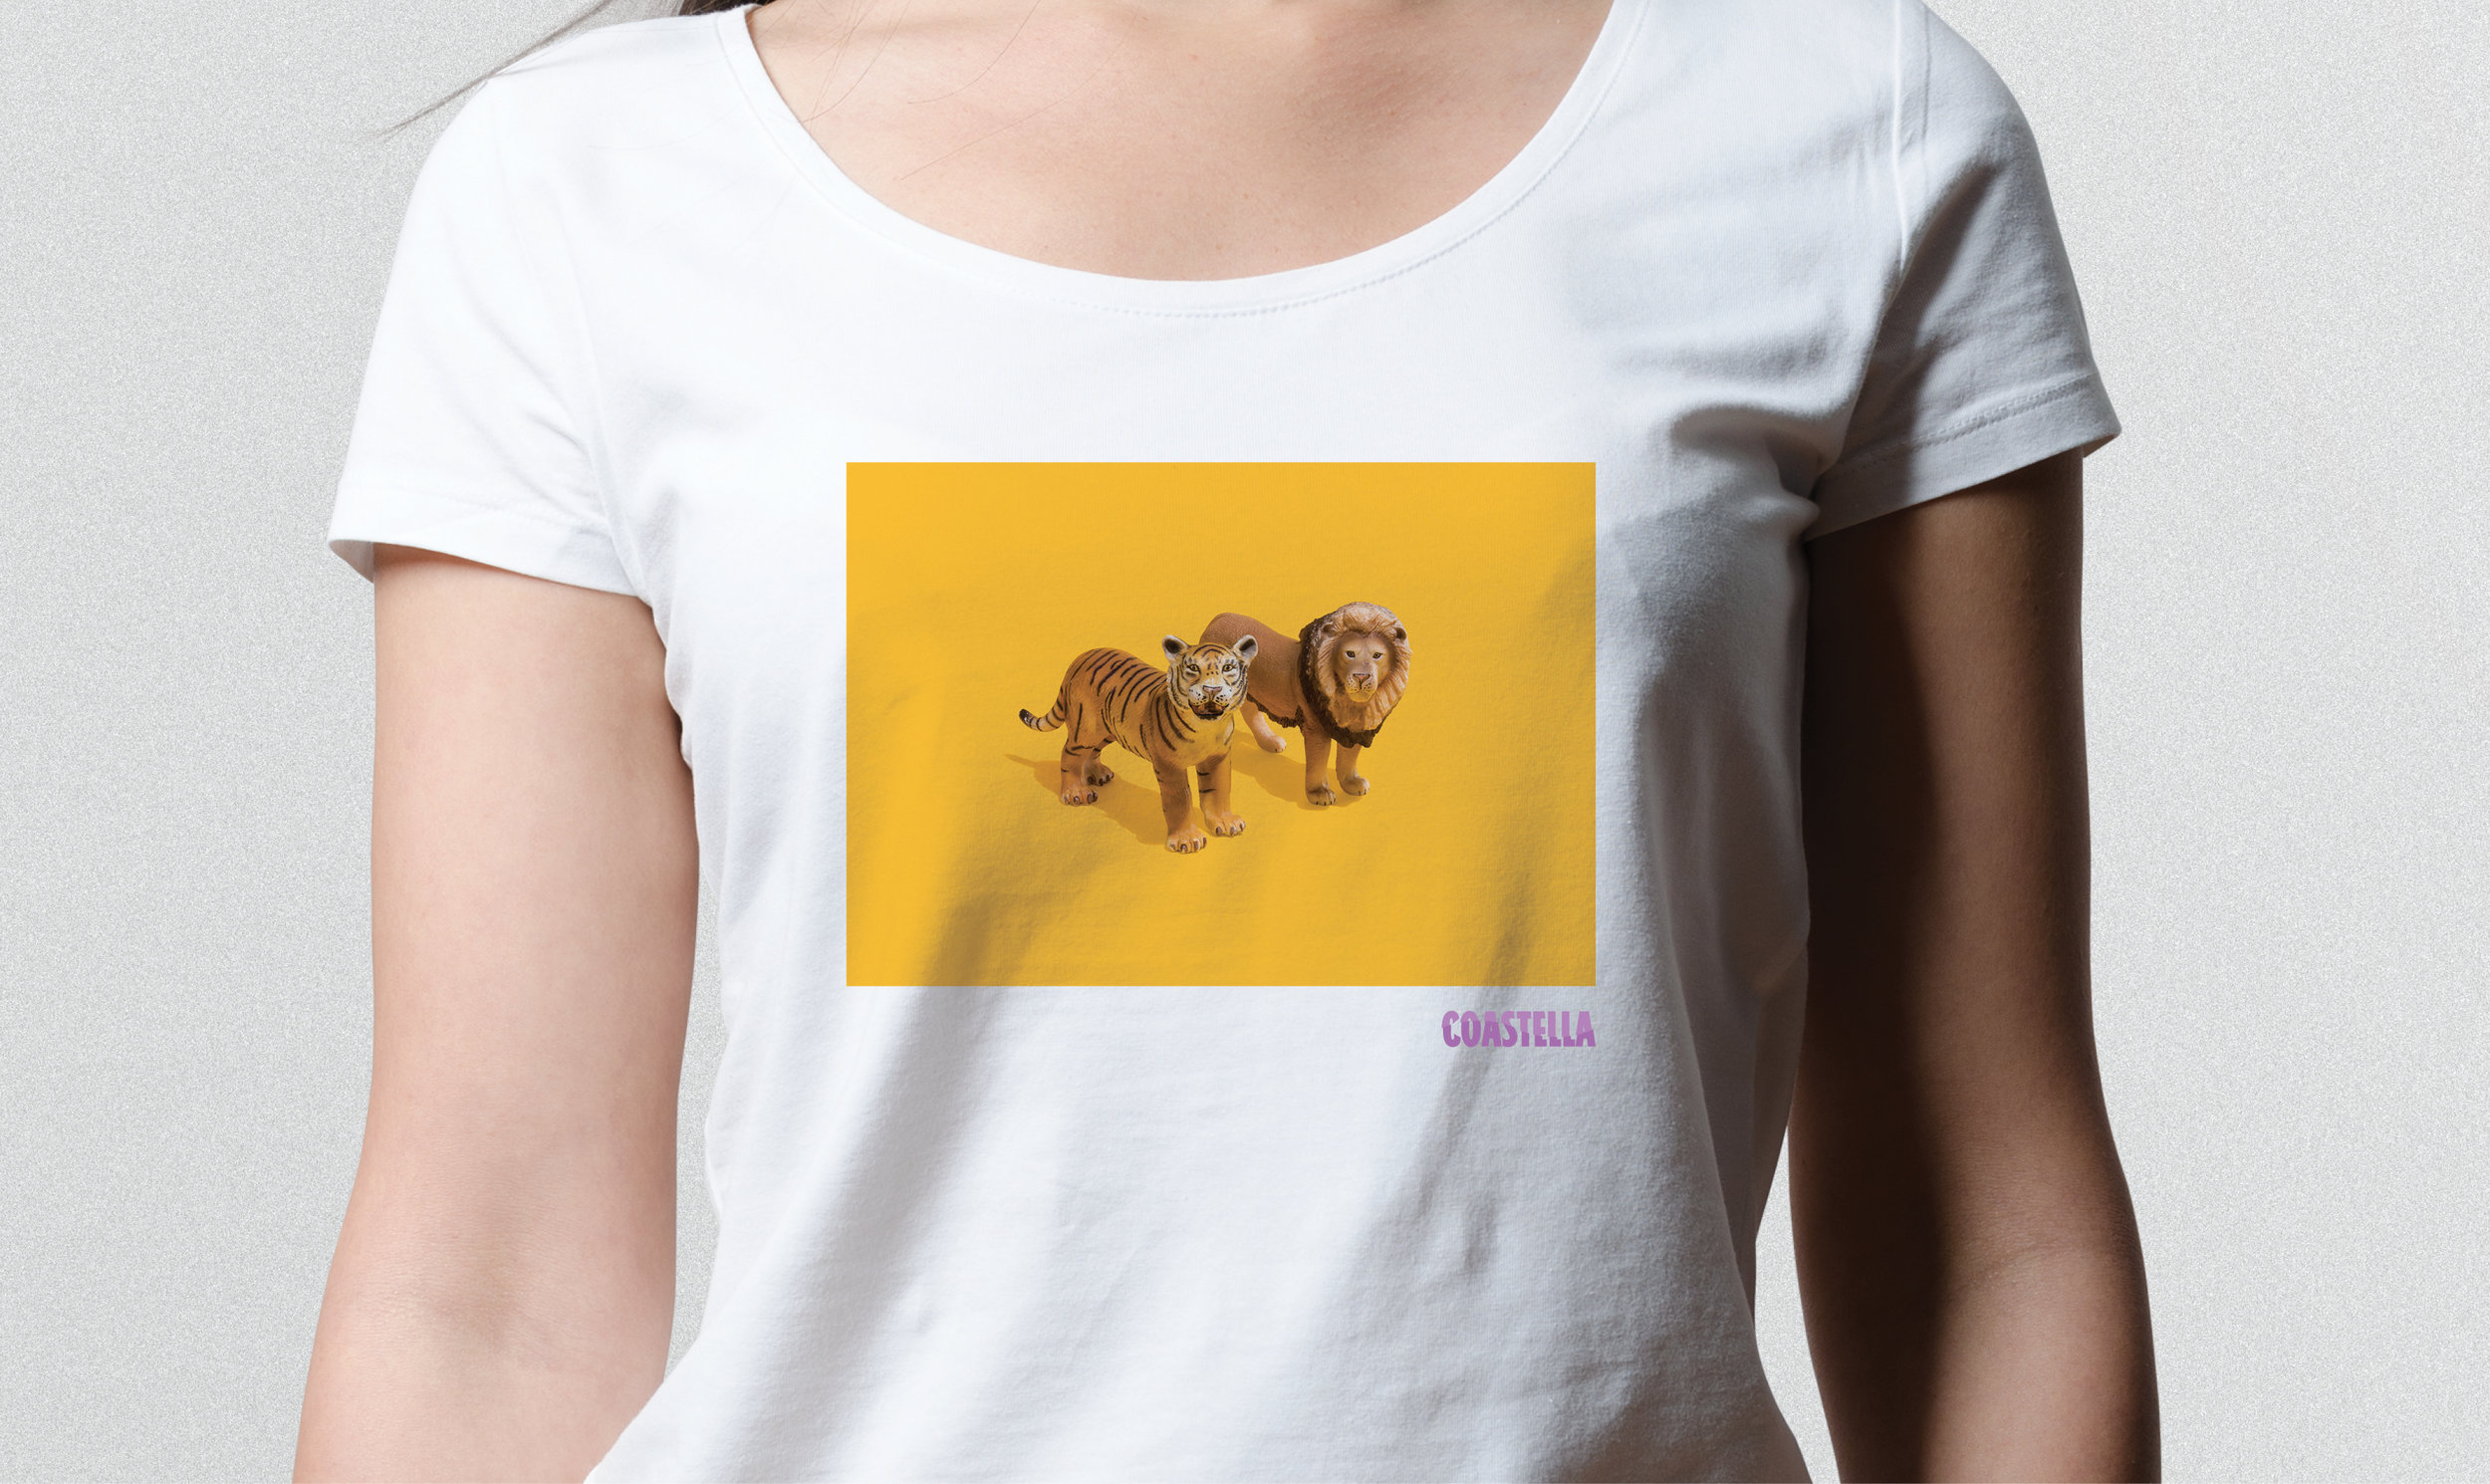 Coastella tee-shirt design.jpg